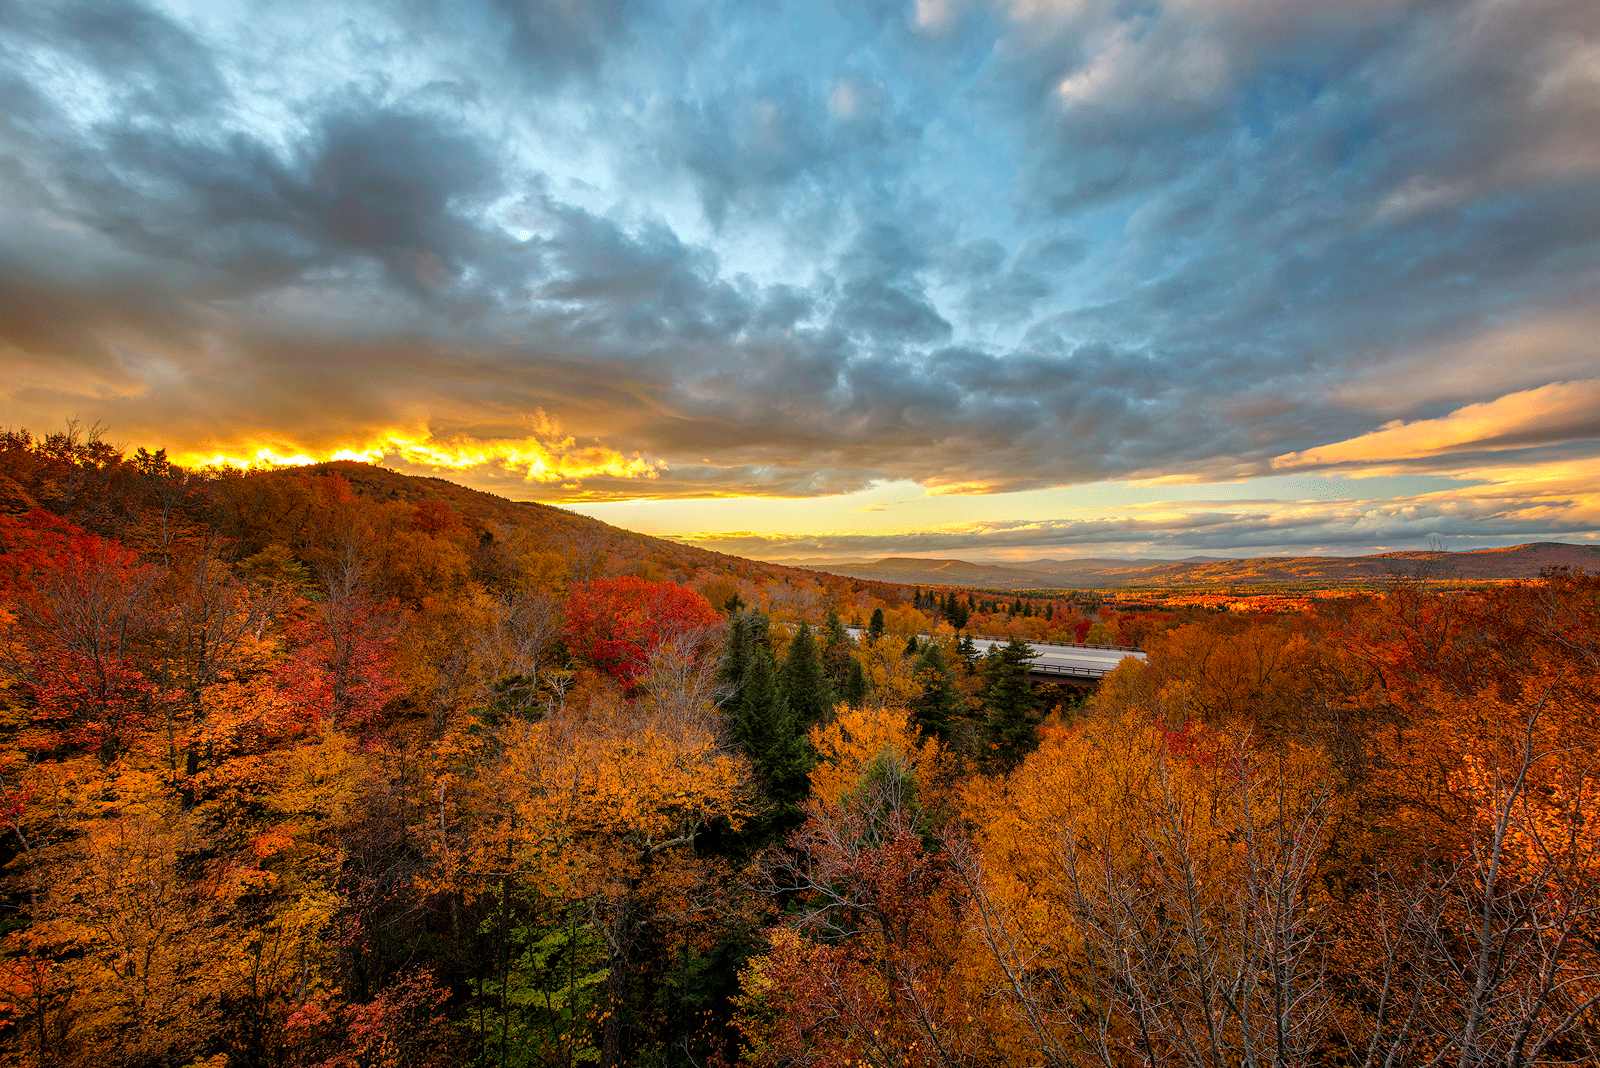 Kancamagus Highway, White Mountains, New Hampshire, Autumn, Bright, Colorful, Leaves, Fall Season, Road, Trees, Bridge, Flume...